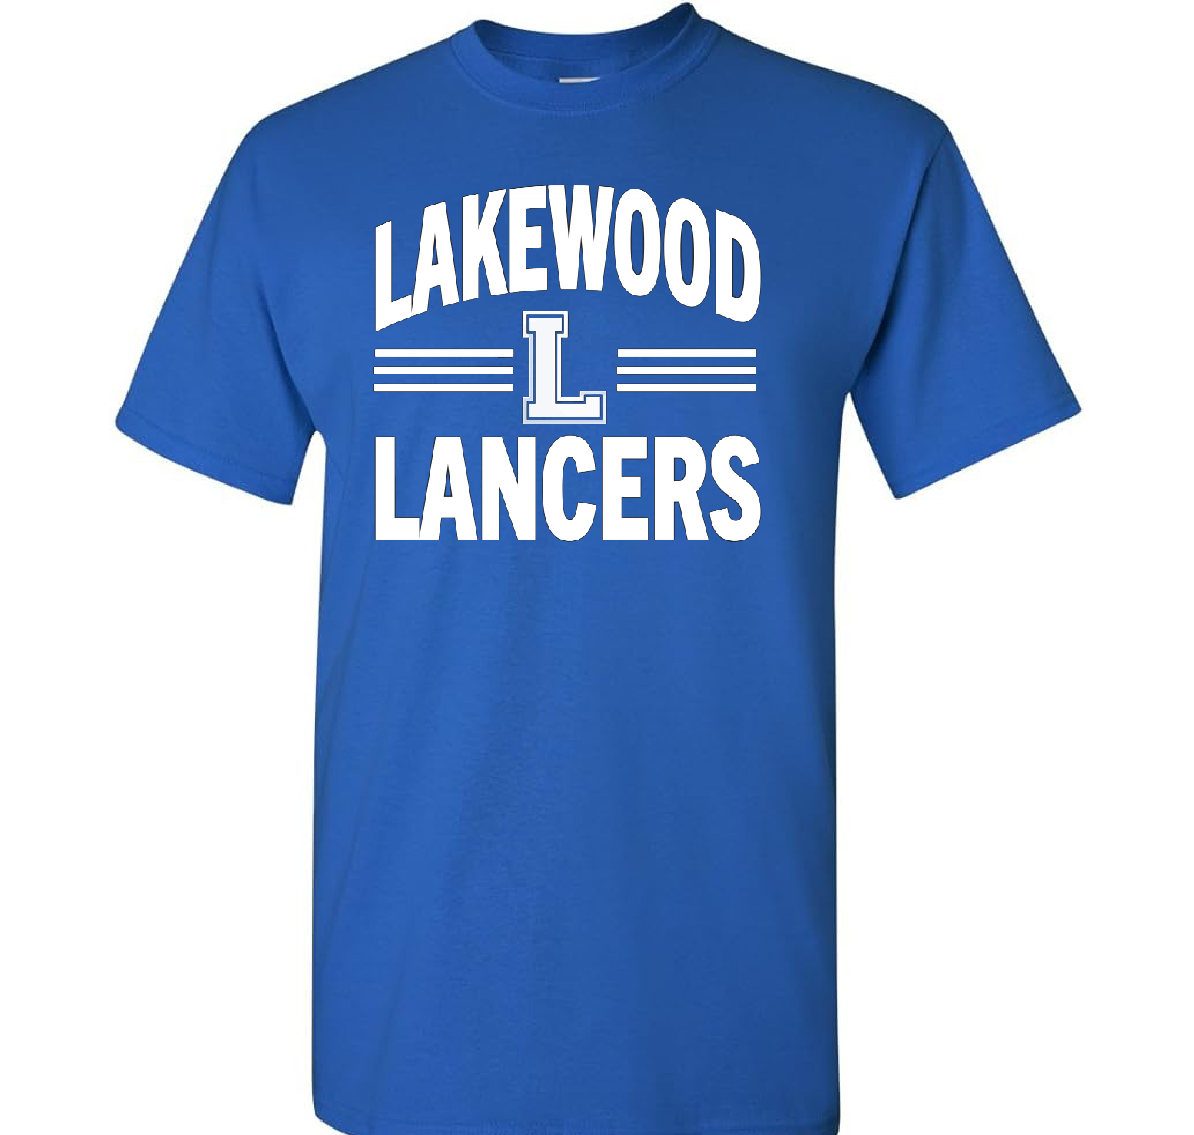 Lakewood Lancers Short-Sleeve Tee